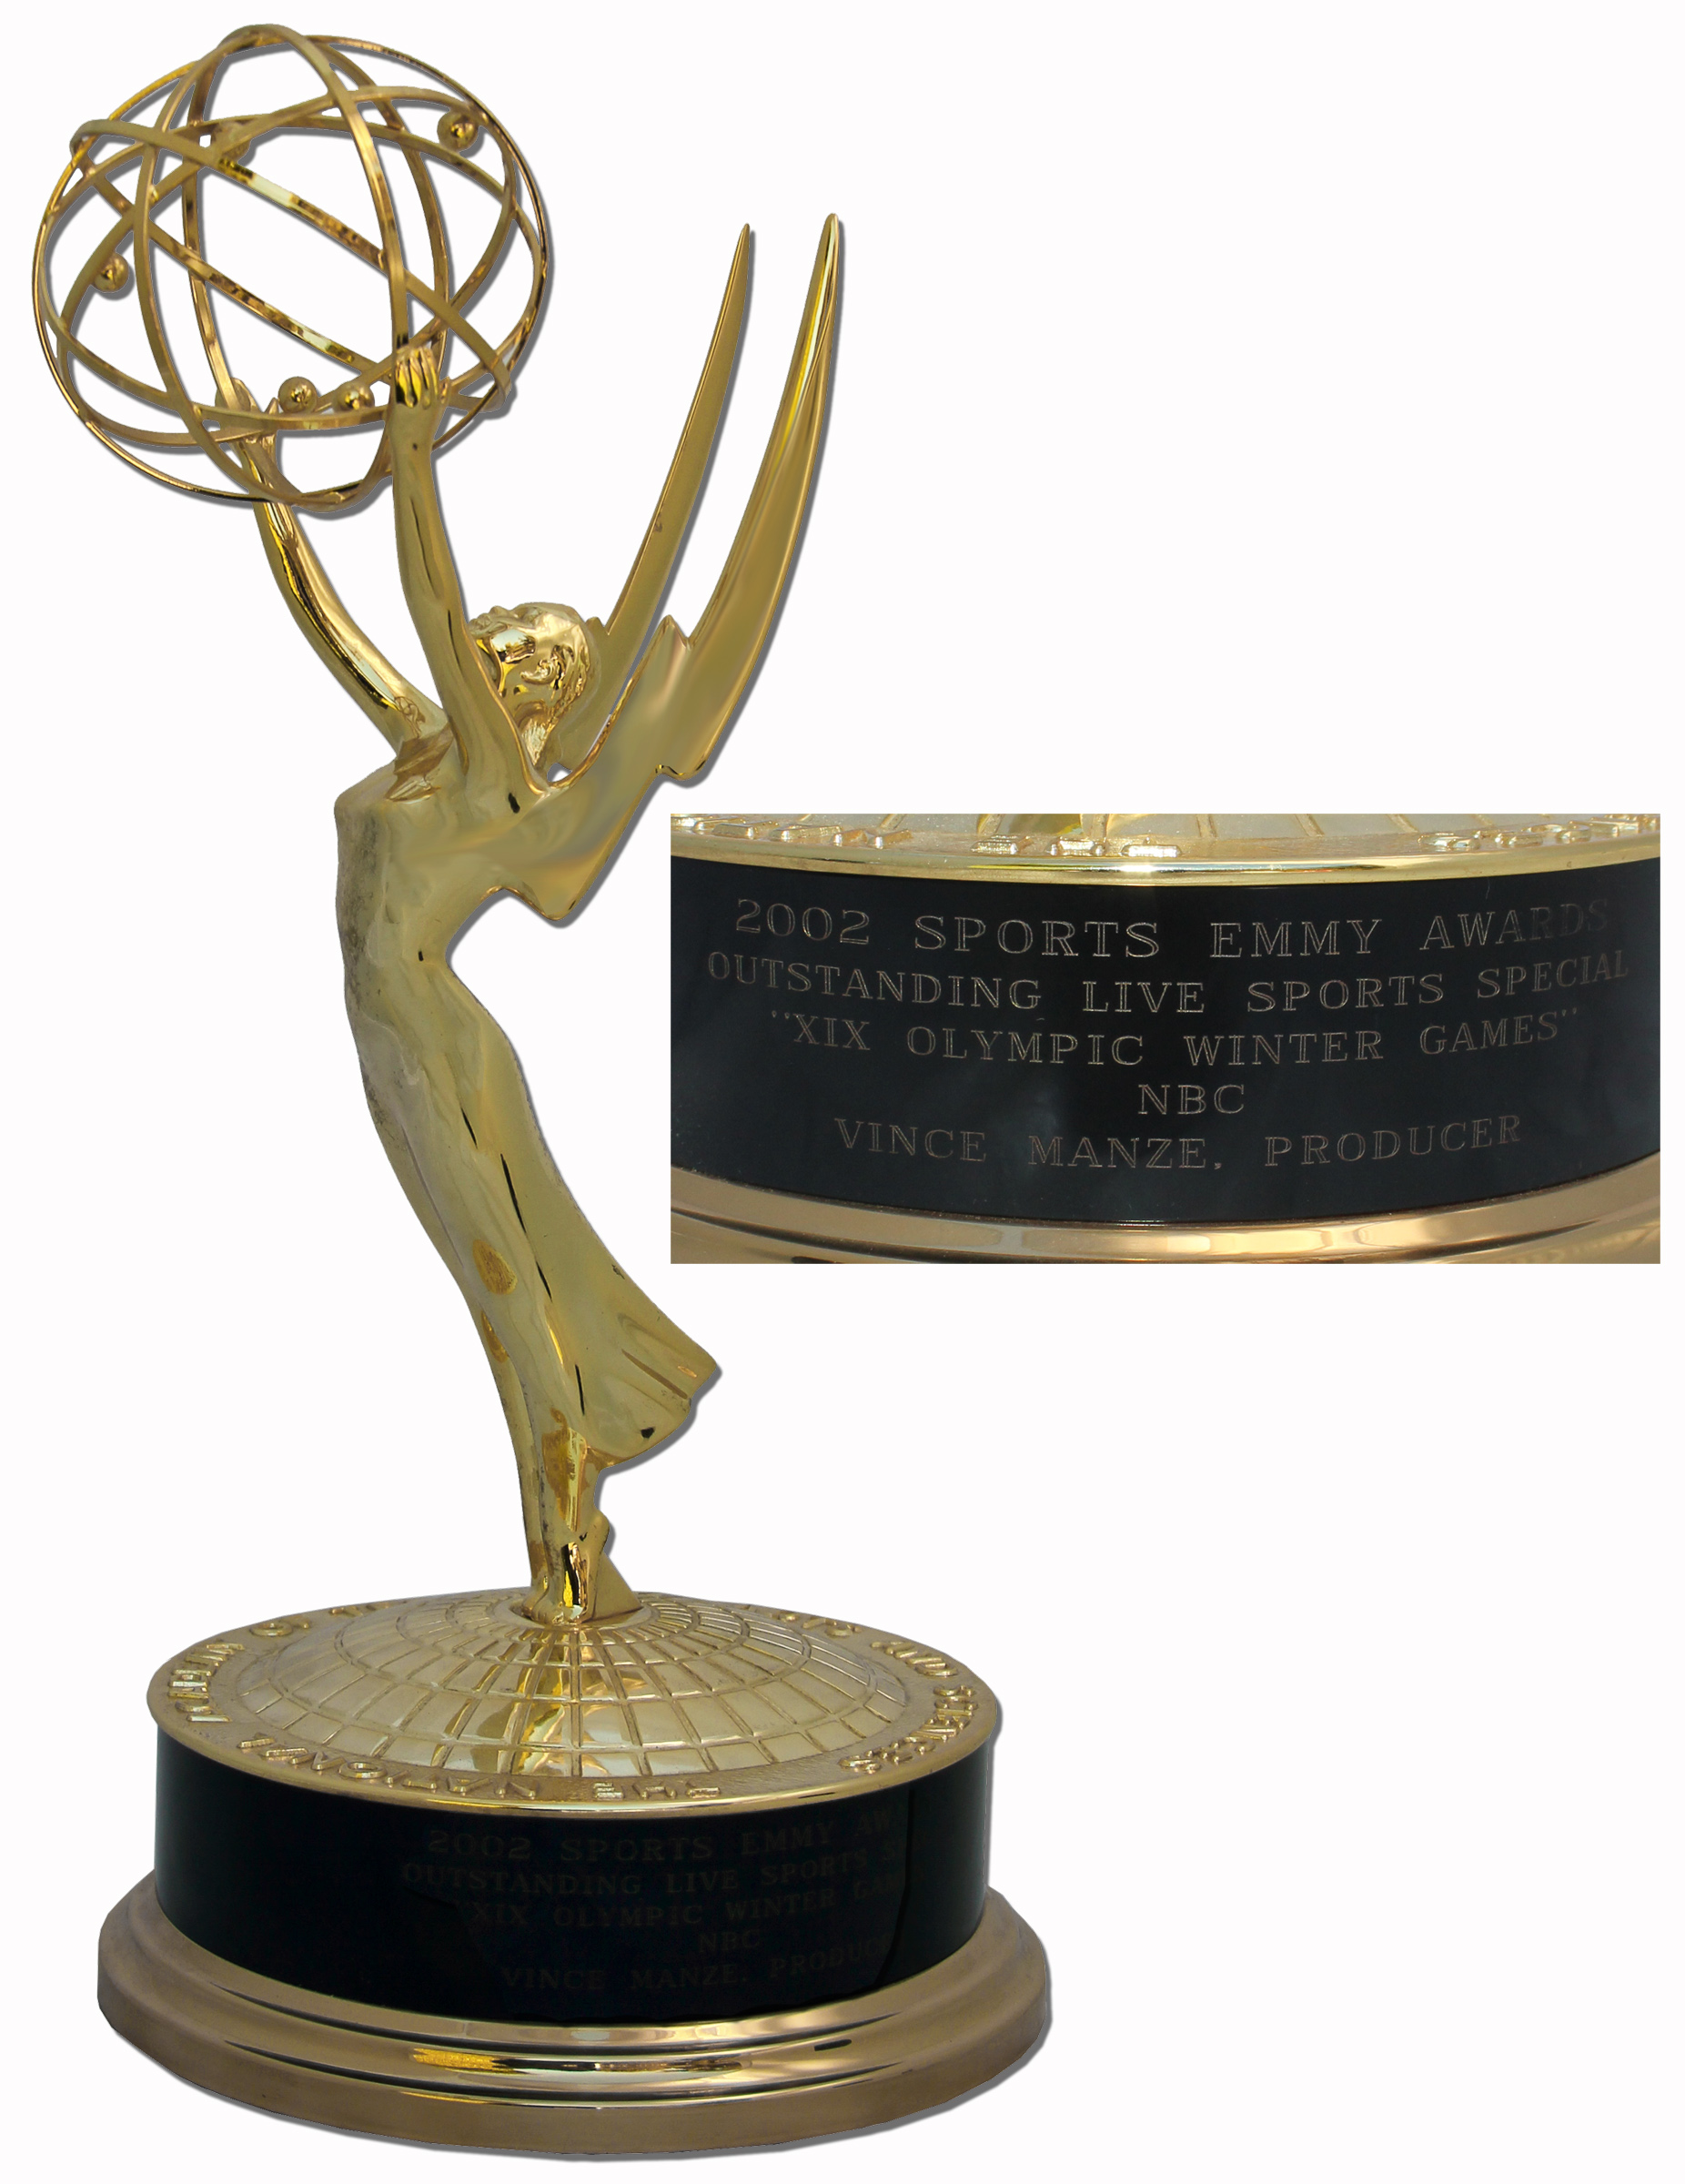 Stunning 2002 Winter Olympics Sports Emmy Brilliant Emmy Award, presented at the 2002 Sports Emmy